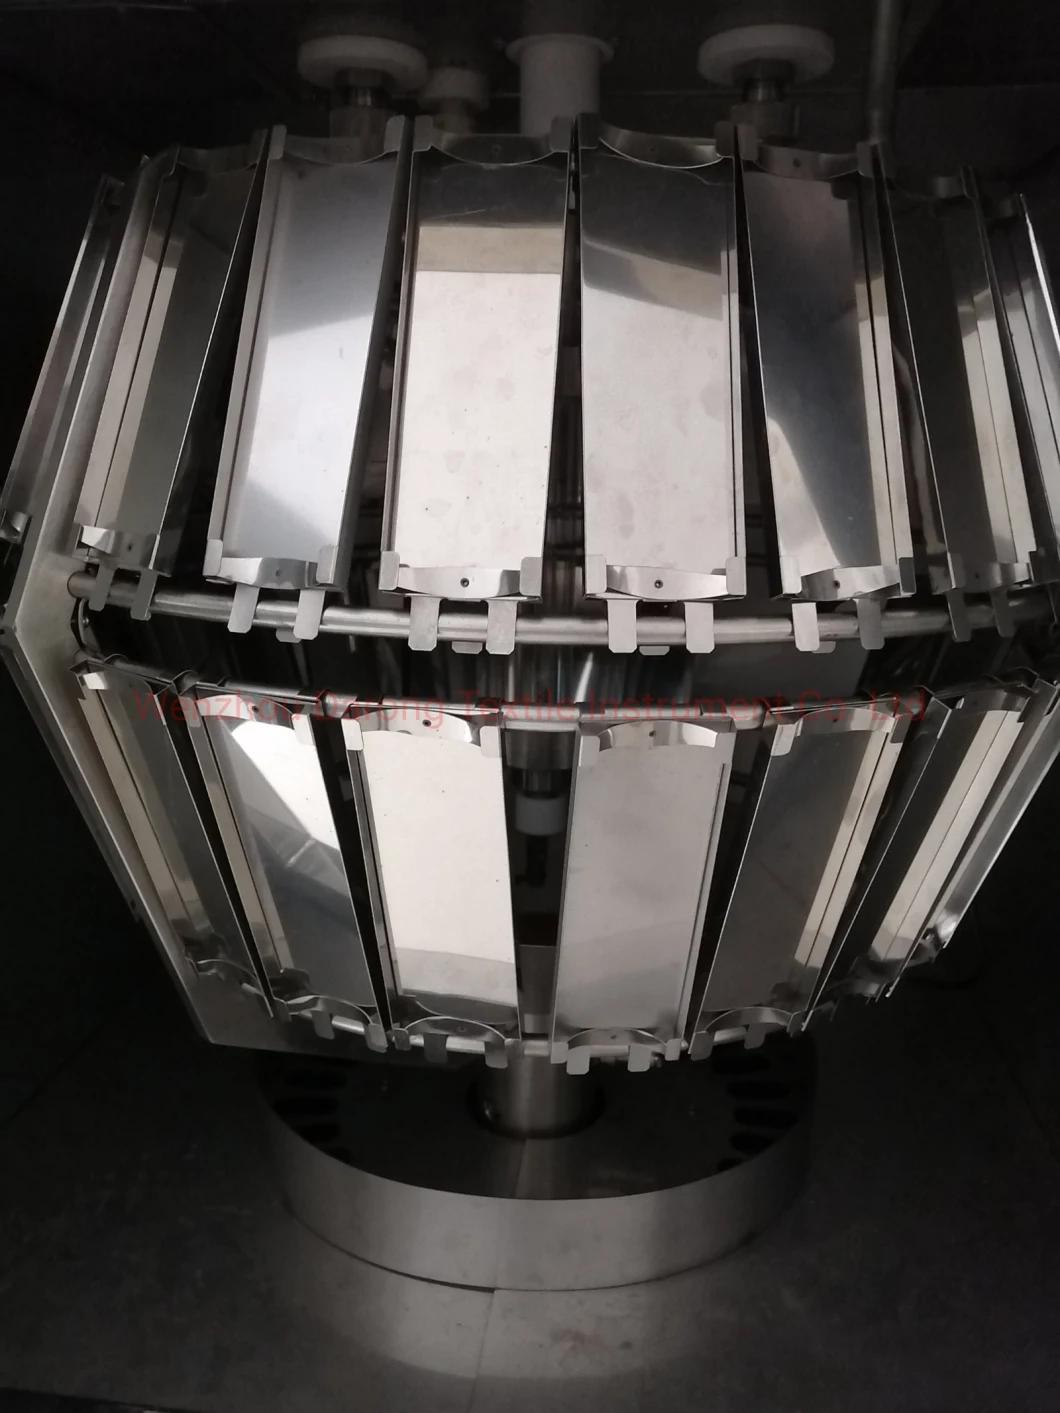 Xenon Arc Light Fastness Testing Machine Weathering Laboratory Equipment